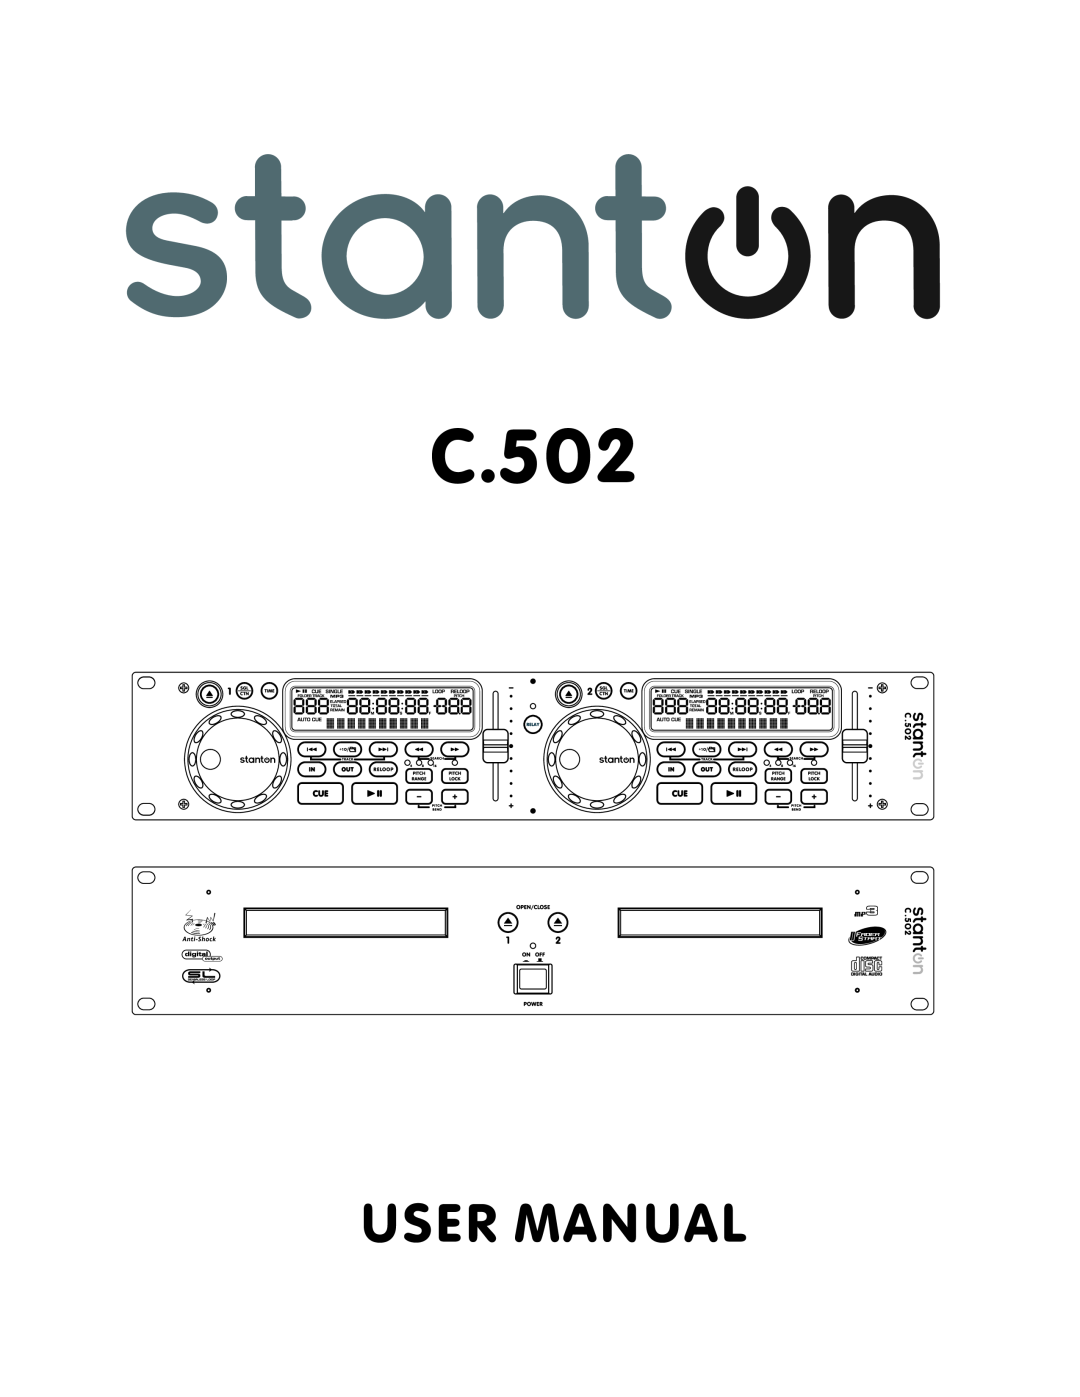 Stanton C.502 user manual 